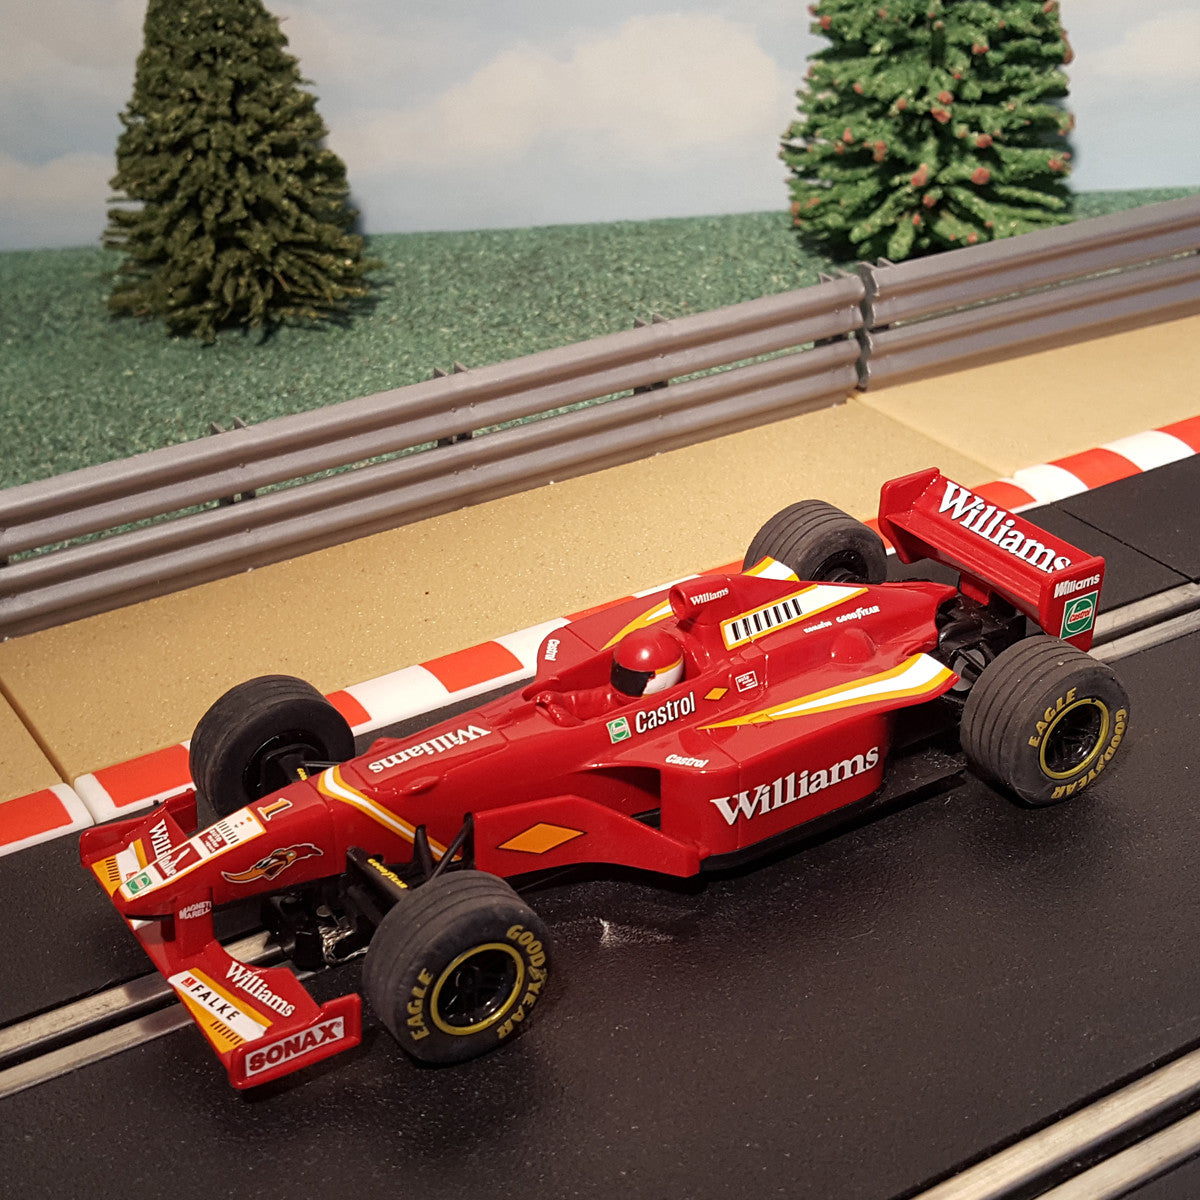 Scalextric 1:32 Car - Formula One F1 - C2161 Red Williams FW20 #1